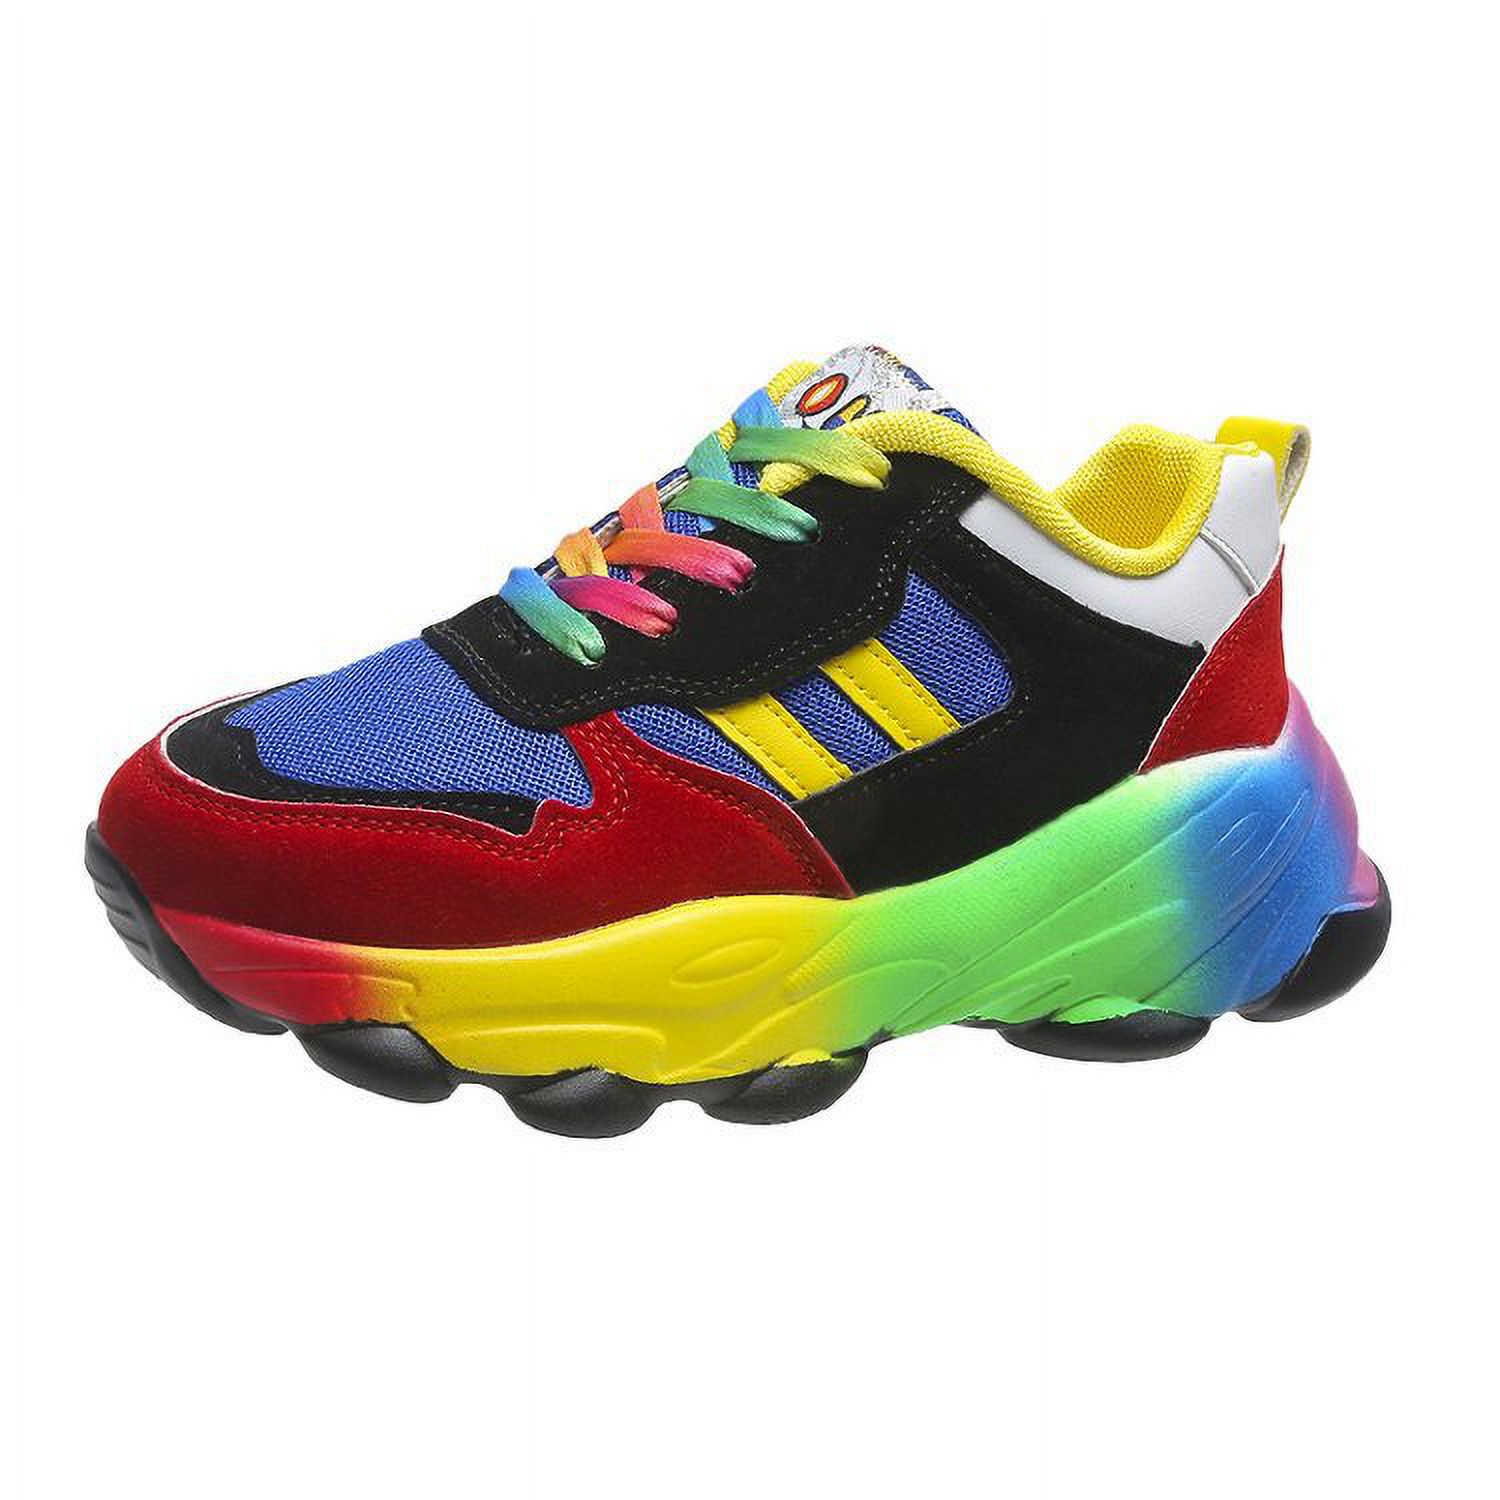 New Orthopedic Shoes Rainbow Sneakers - Slip On Air Cushion Walking ...